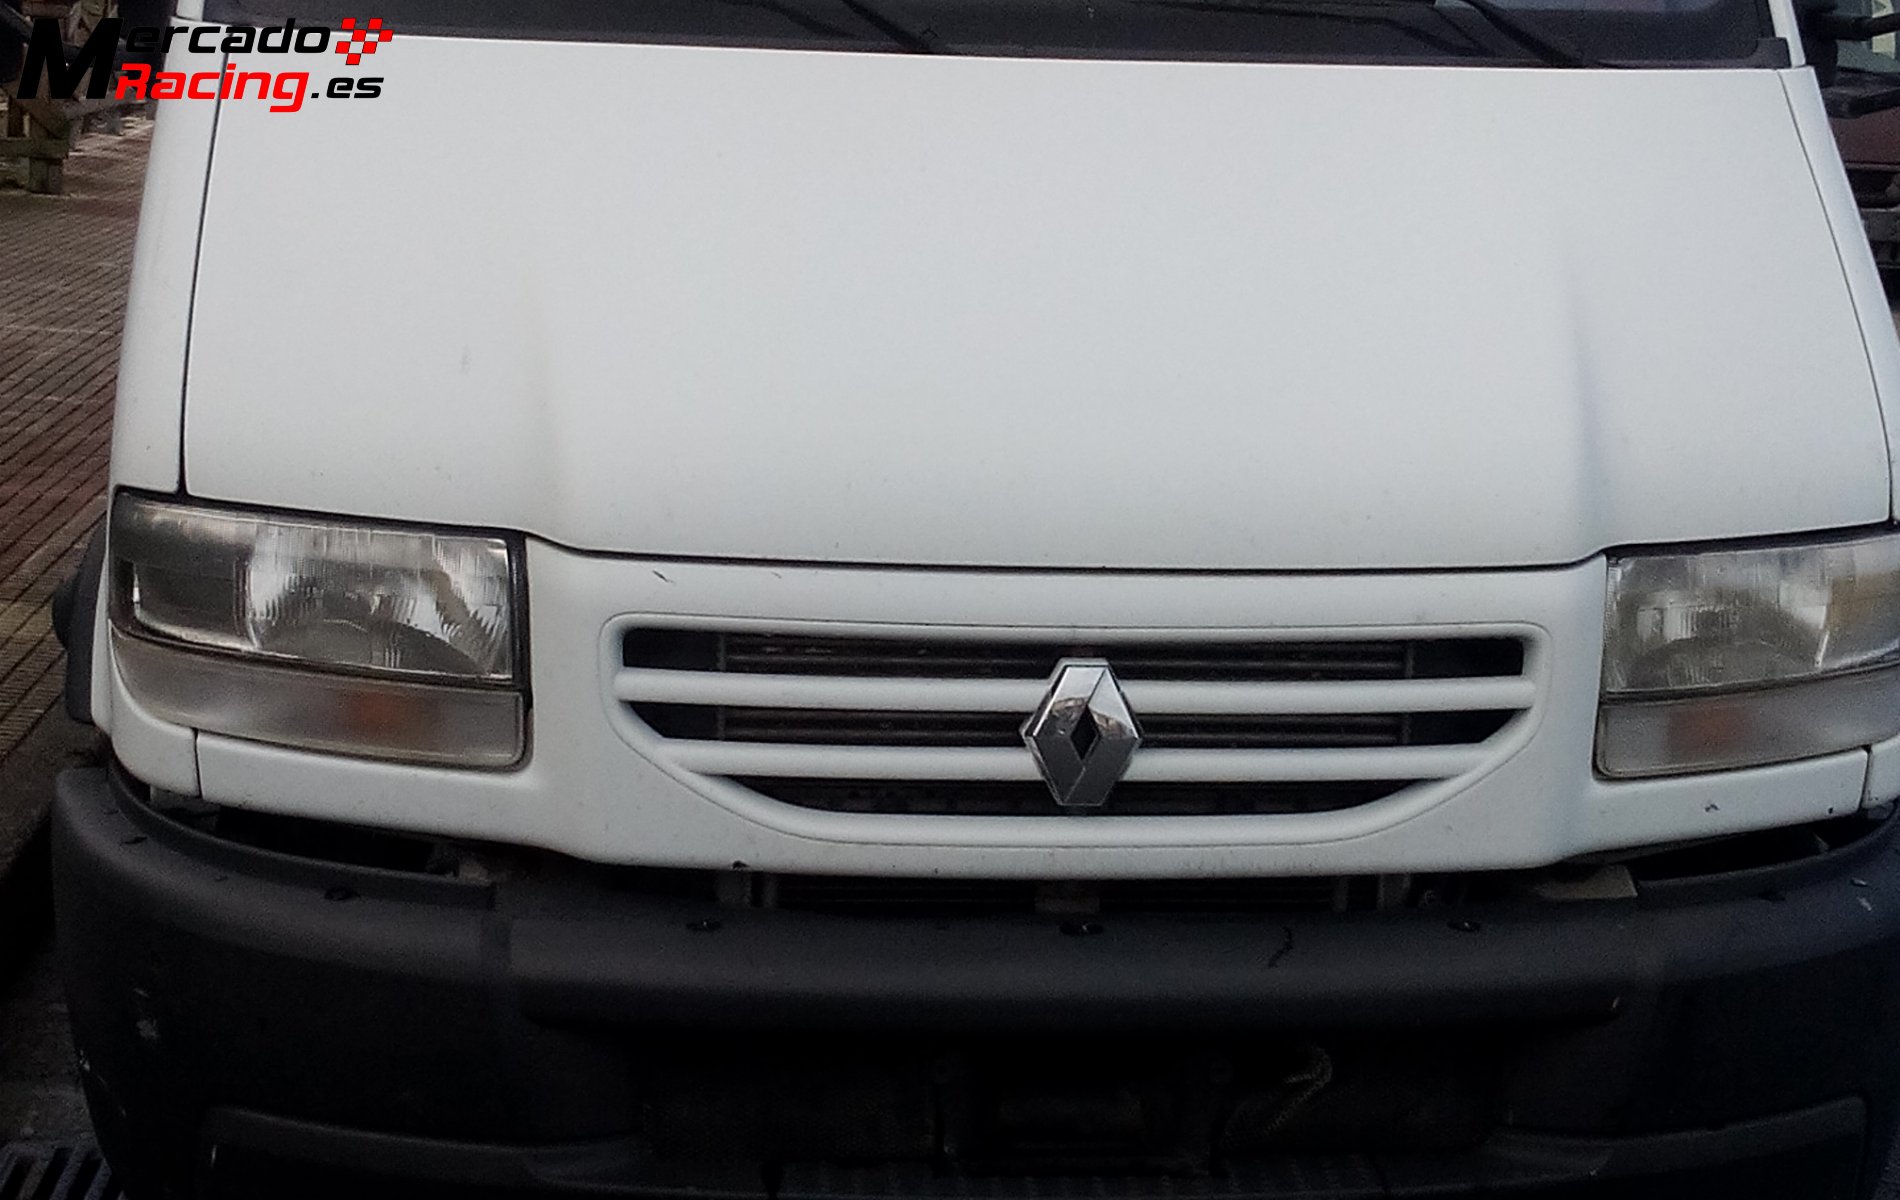 Camion renaul mascot 